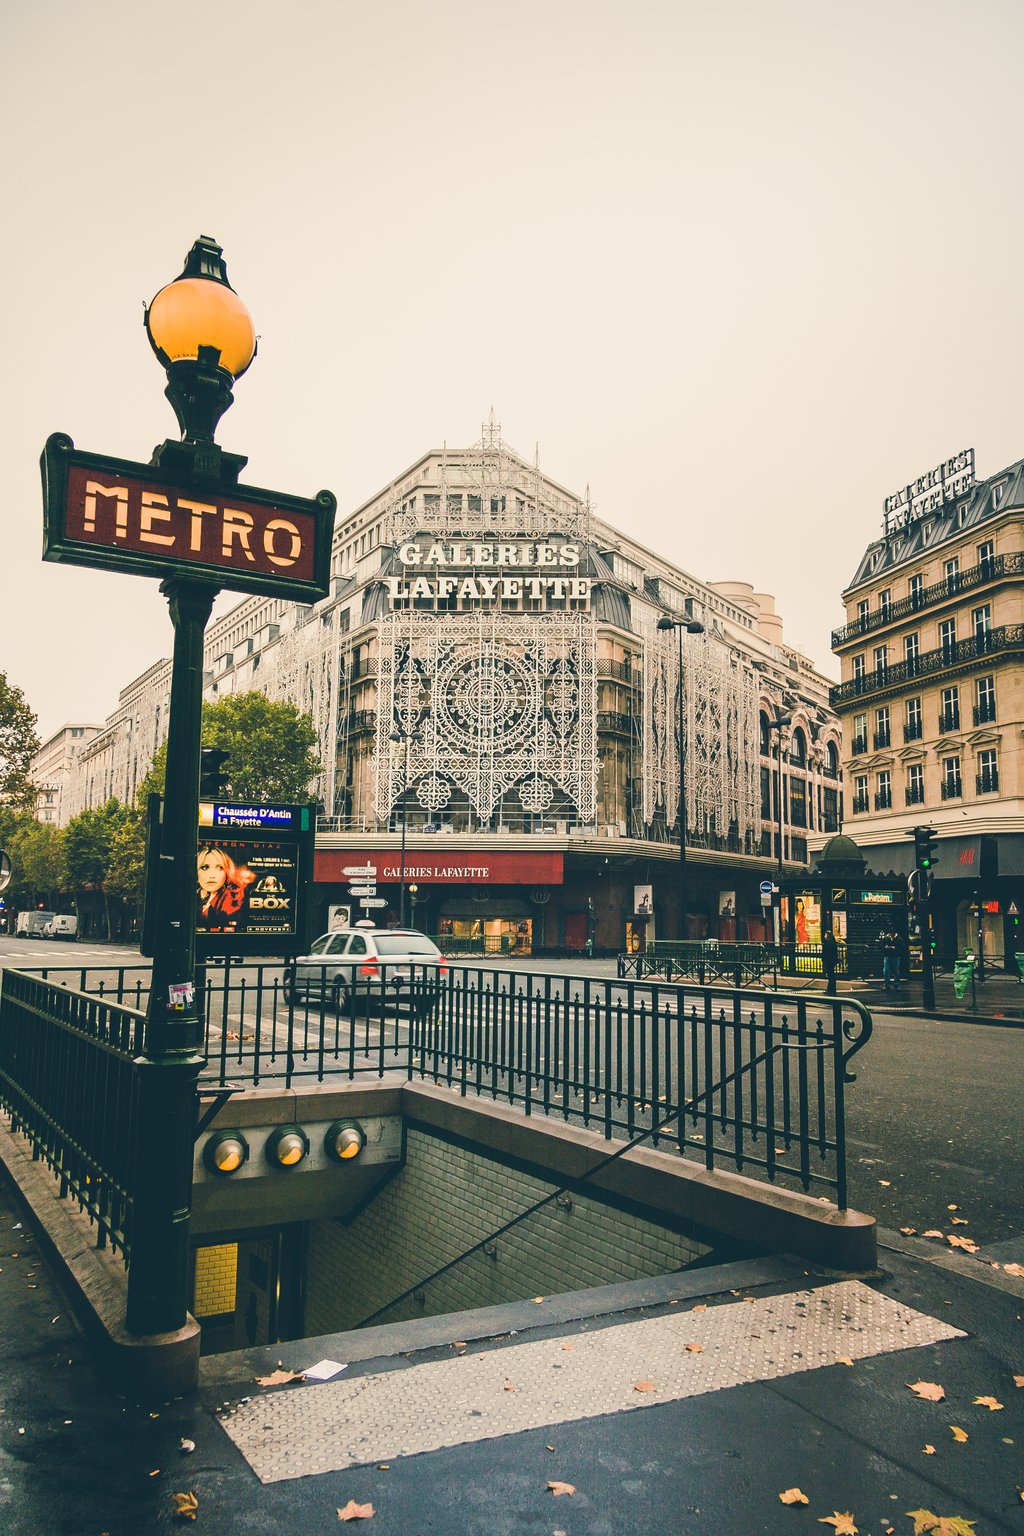 Image of a metro entrance in Paris